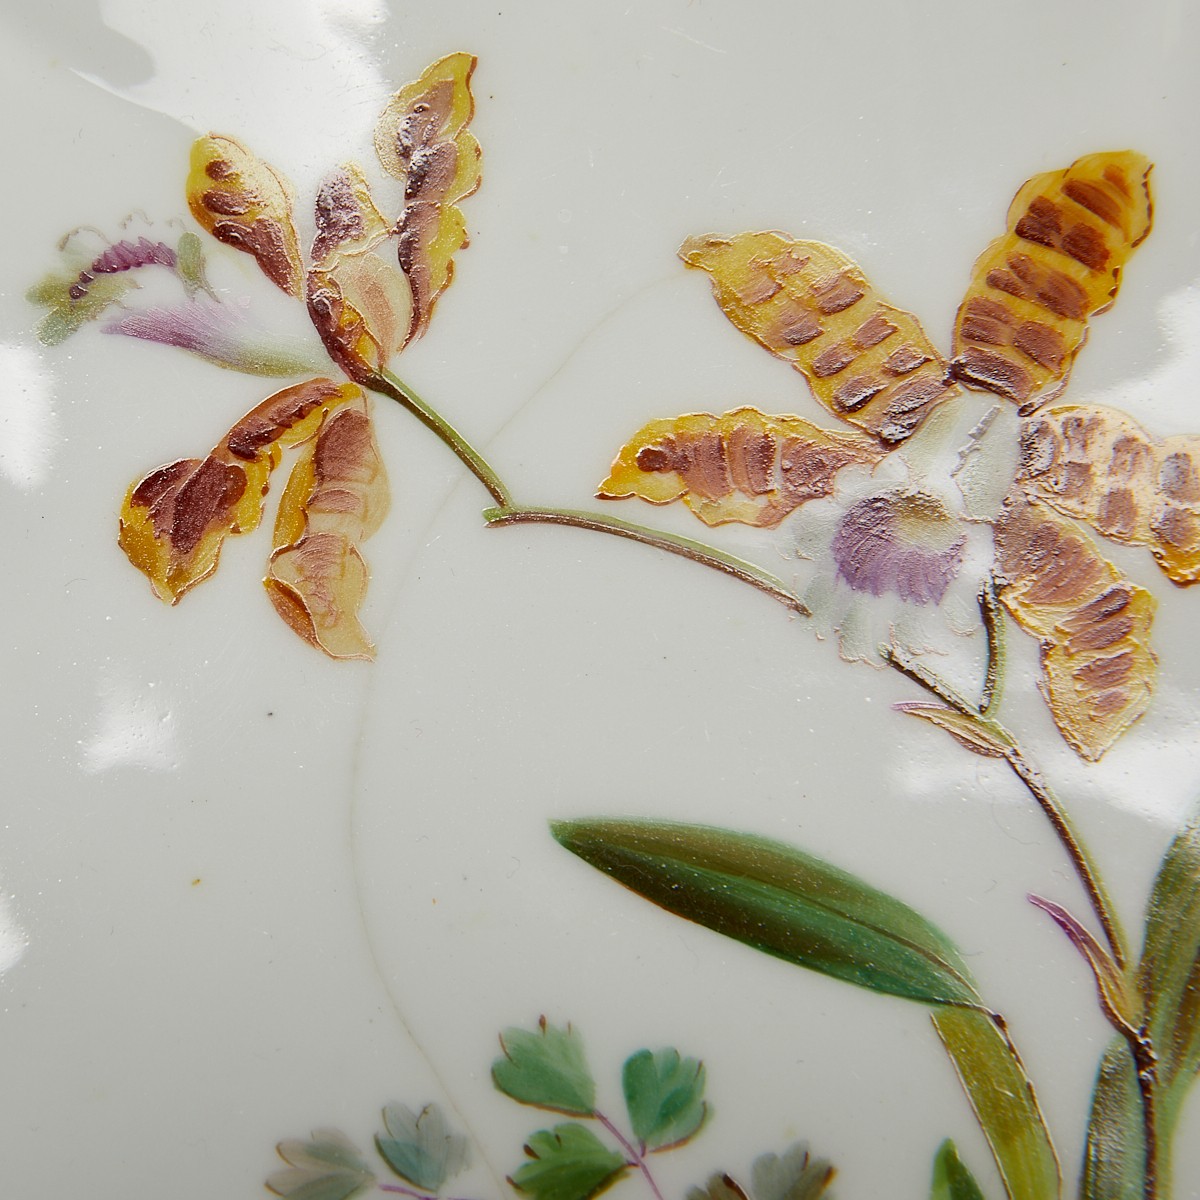 Set 16 Porcelain Orchid Dishes - Poss. Limoges - Image 9 of 17